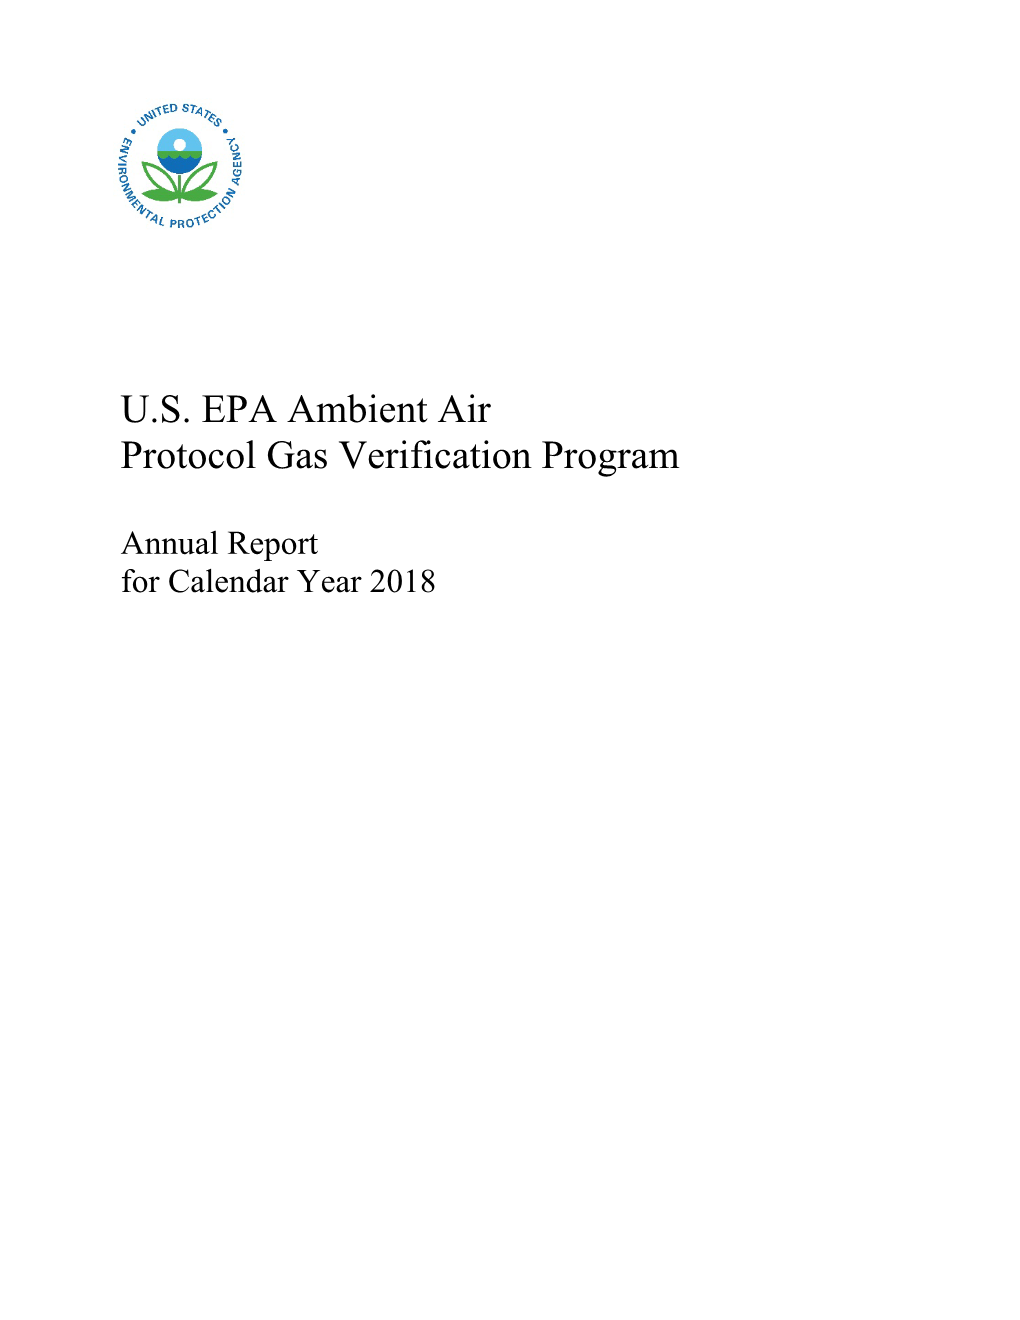 U.S. EPA Ambient Air Protocol Gas Verification Program